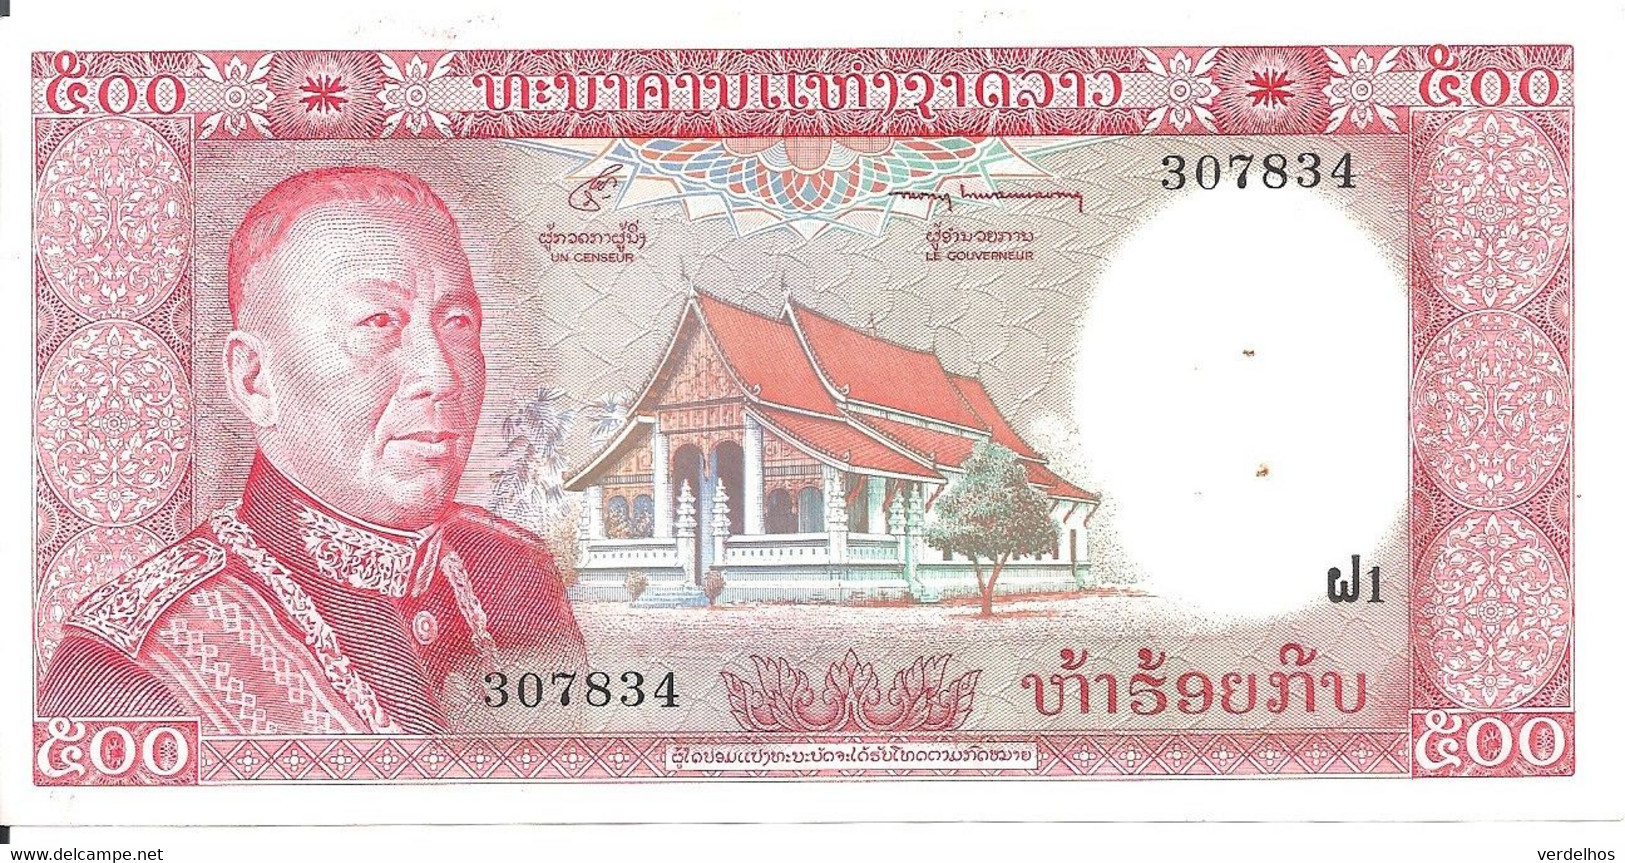 LAOS 500 KIP ND1974 AUNC P 17 - Laos